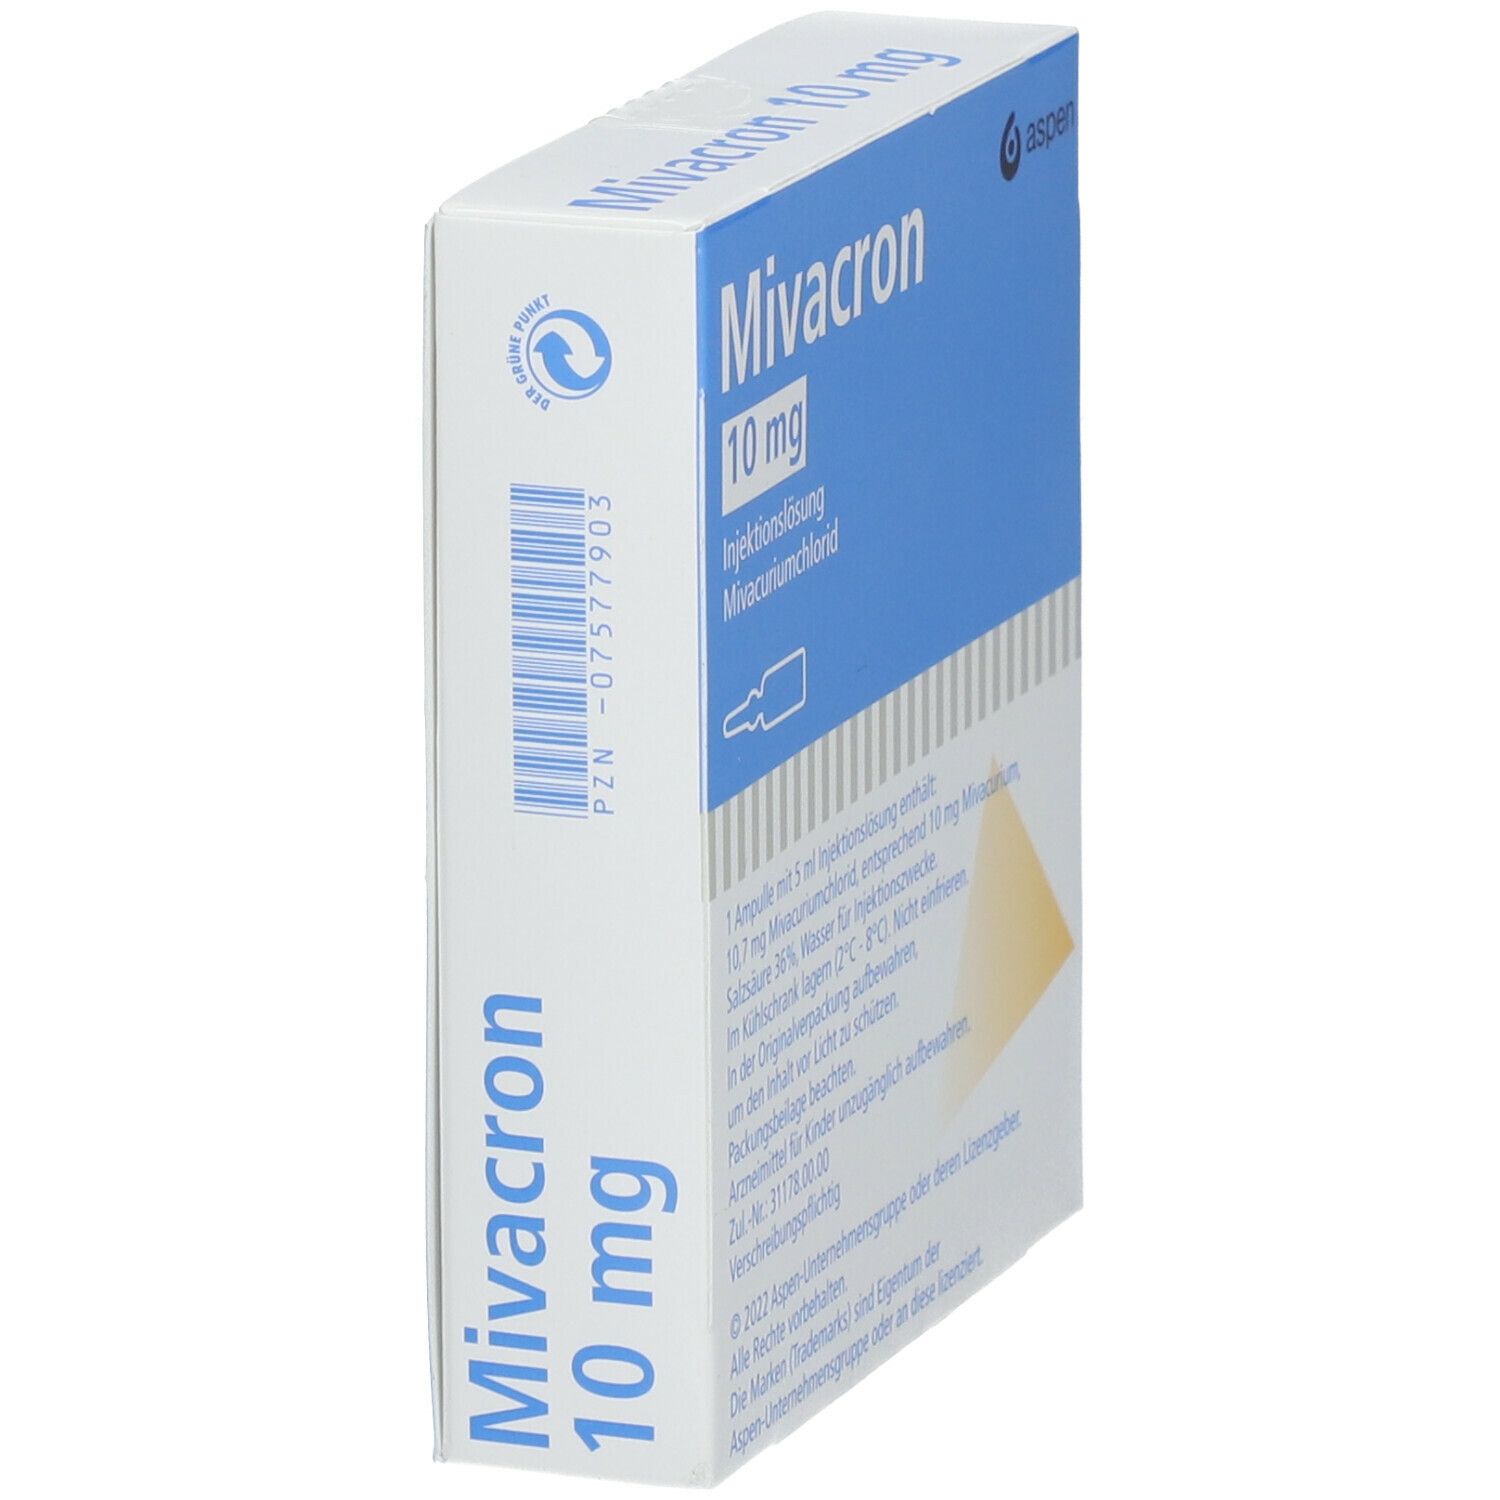 Mivacron® 10 mg